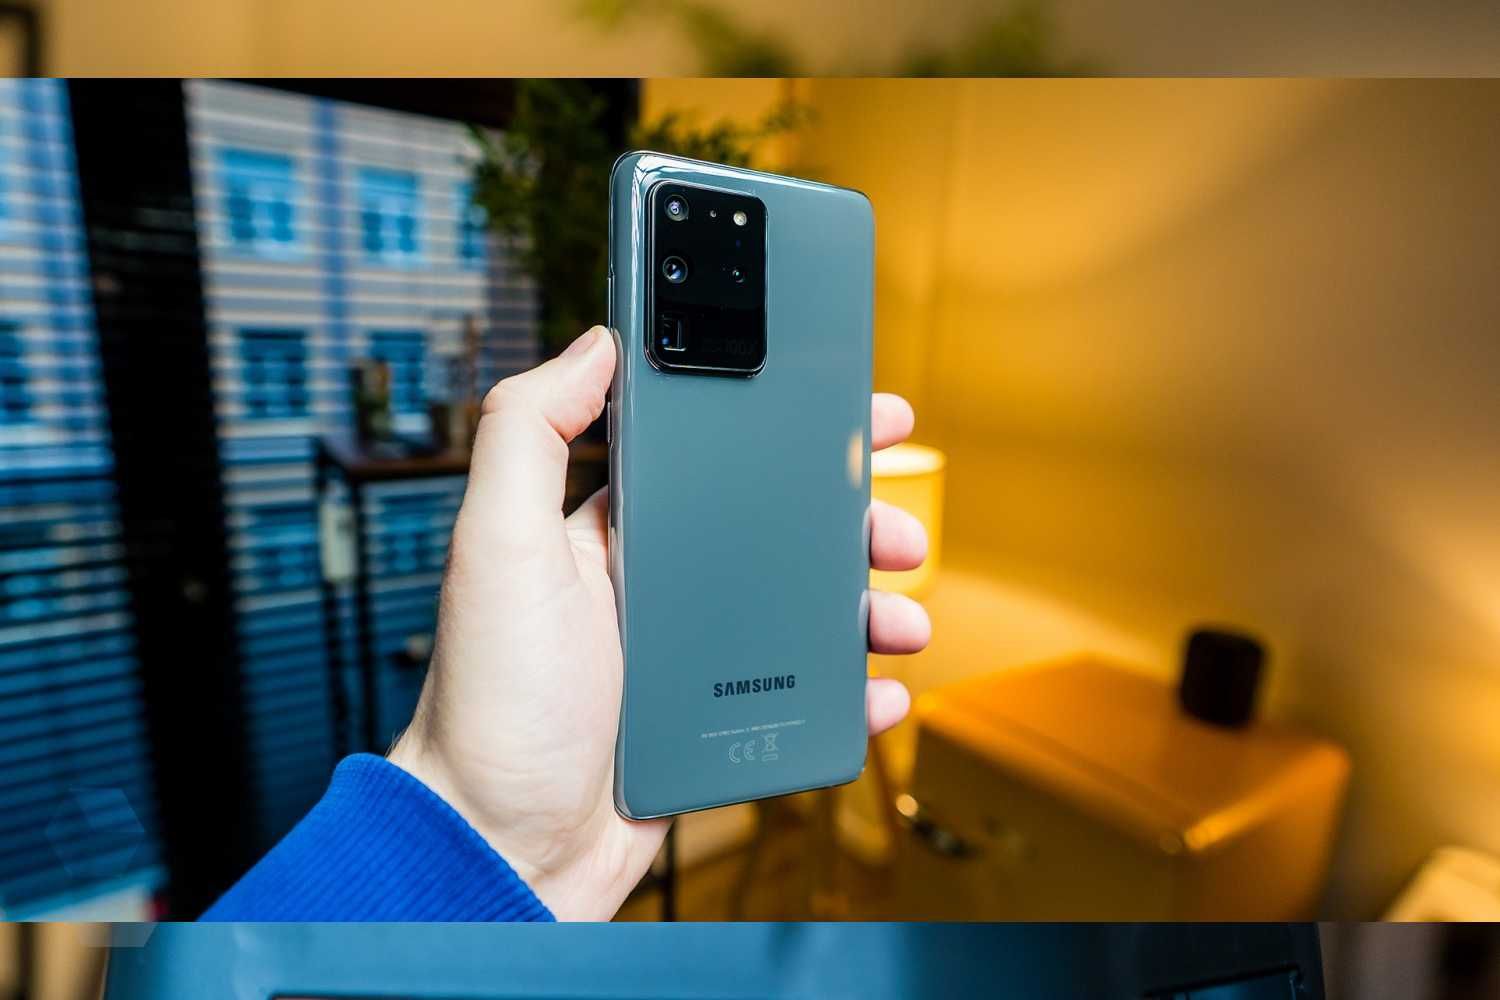 Смартфон Samsung Galaxy S20 Ultra silver